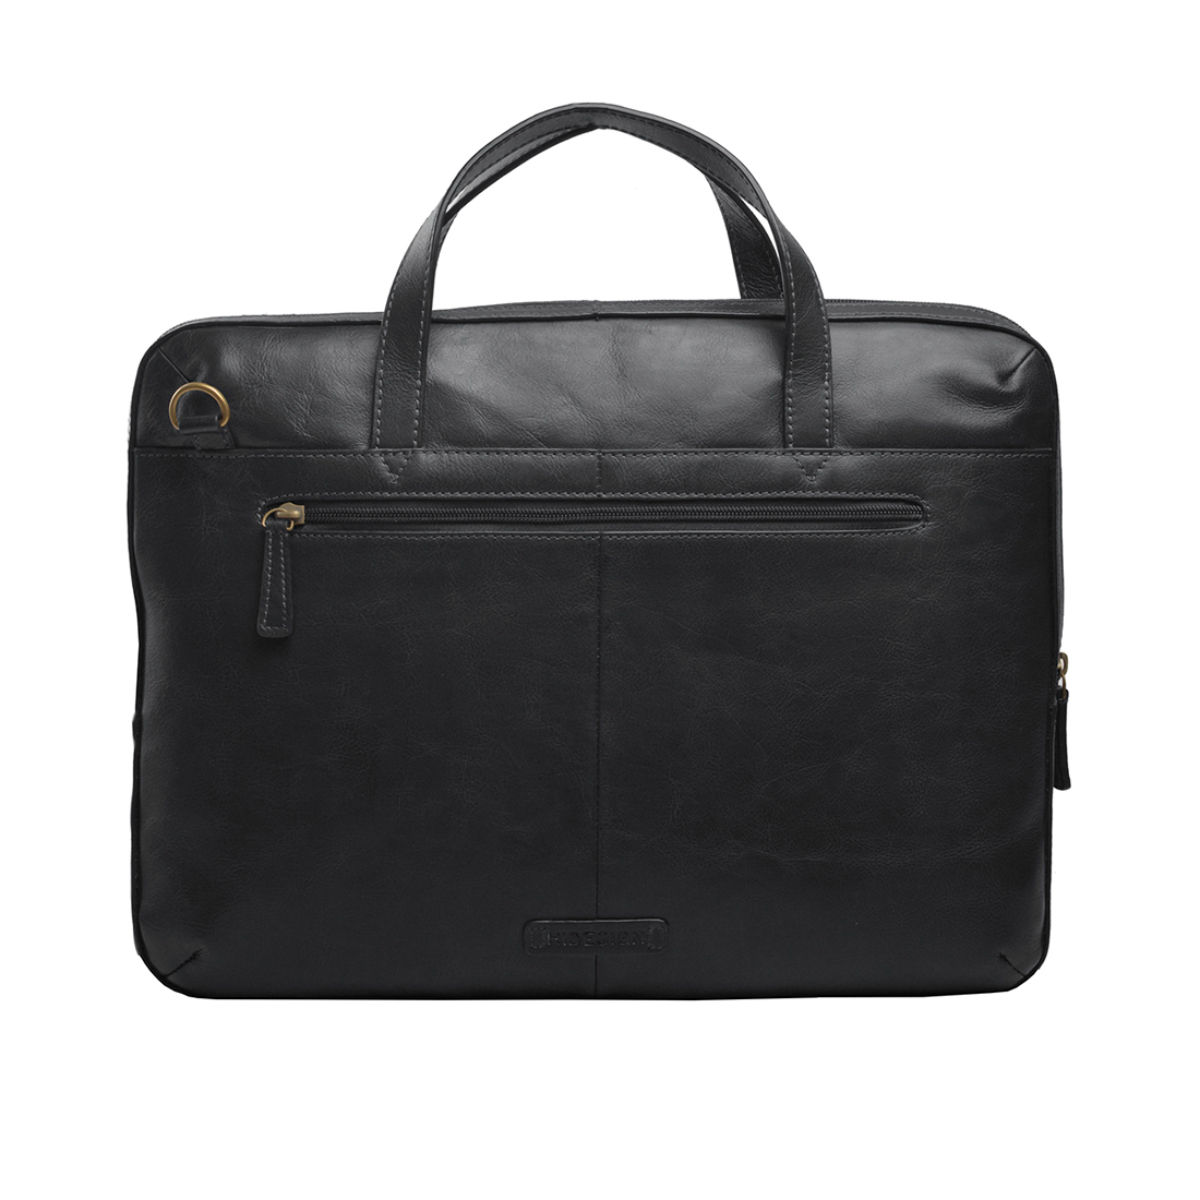 Mens leather laptop bag I Bleu de Chauffe  Made in France  Leather  laptop bag Leather briefcase men Laptop bag men